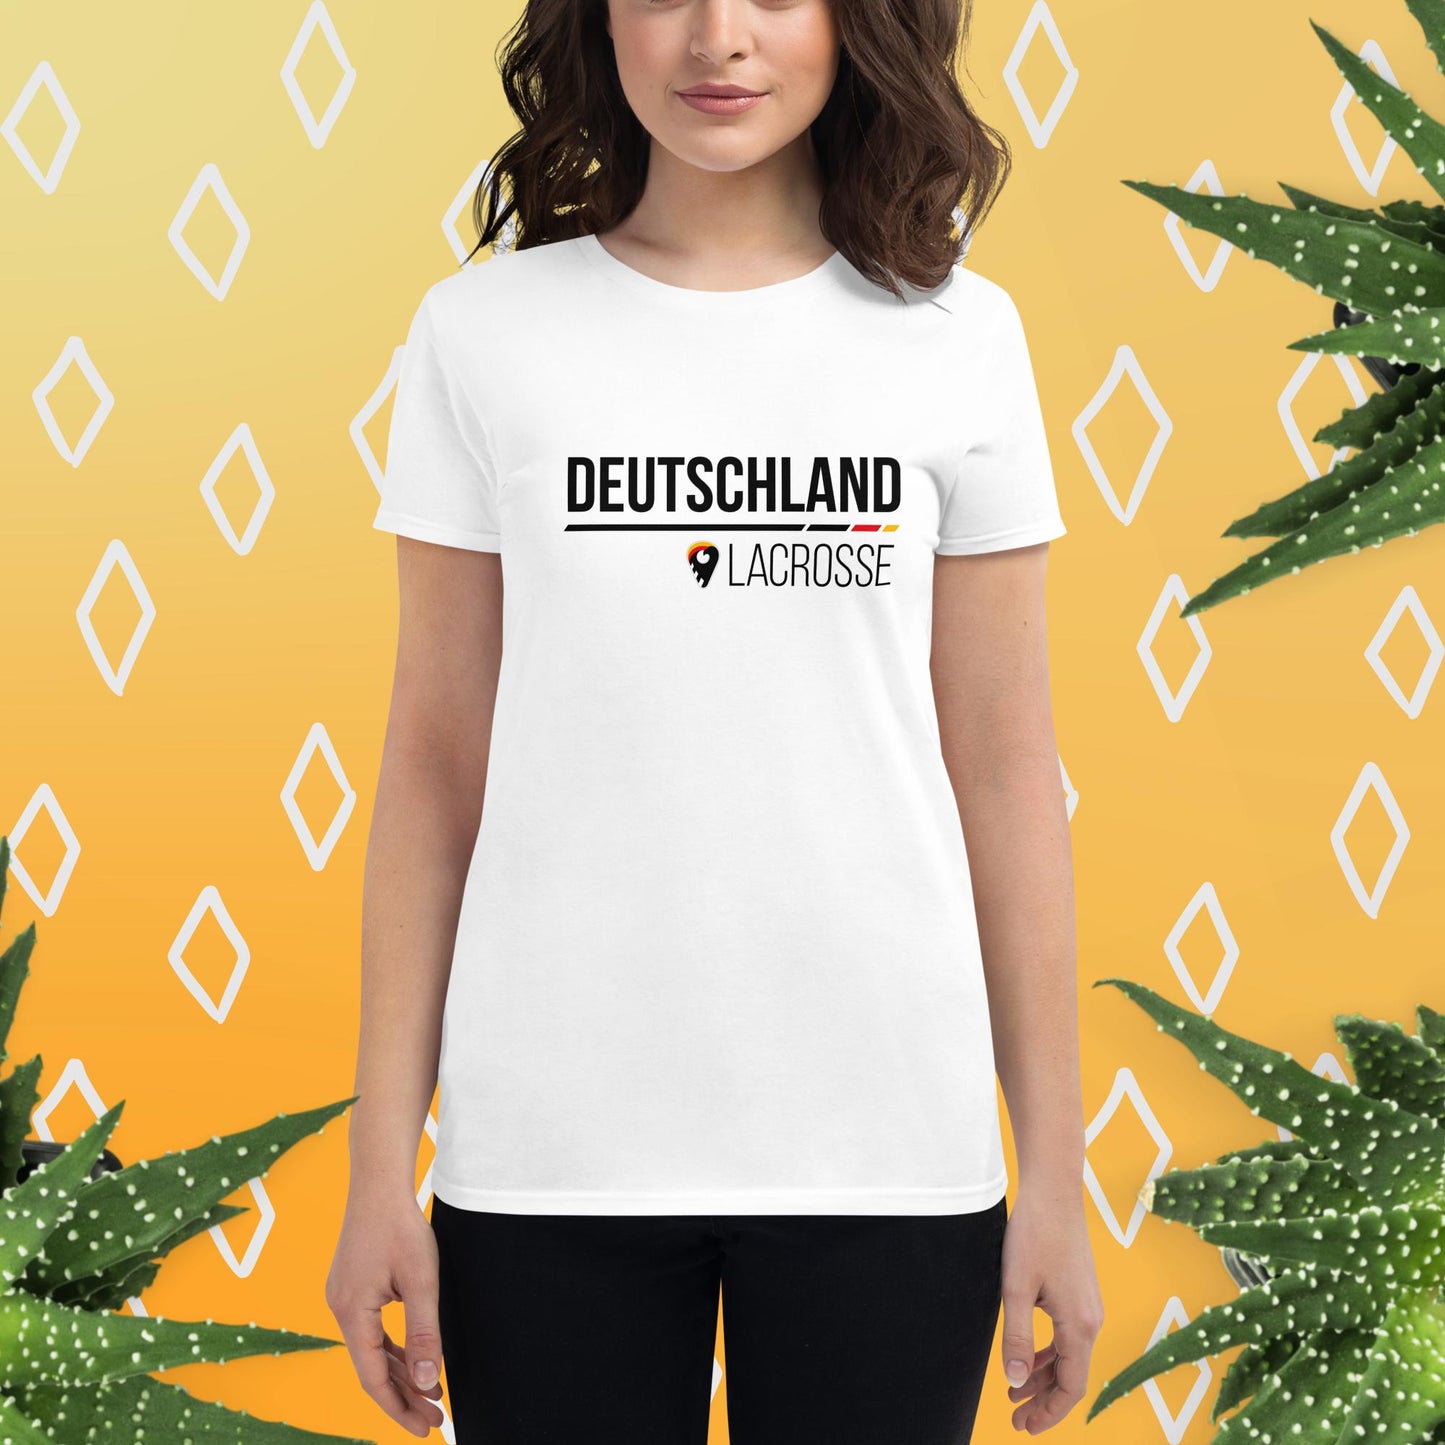 Deutschland Lacrosse women's t-shirt